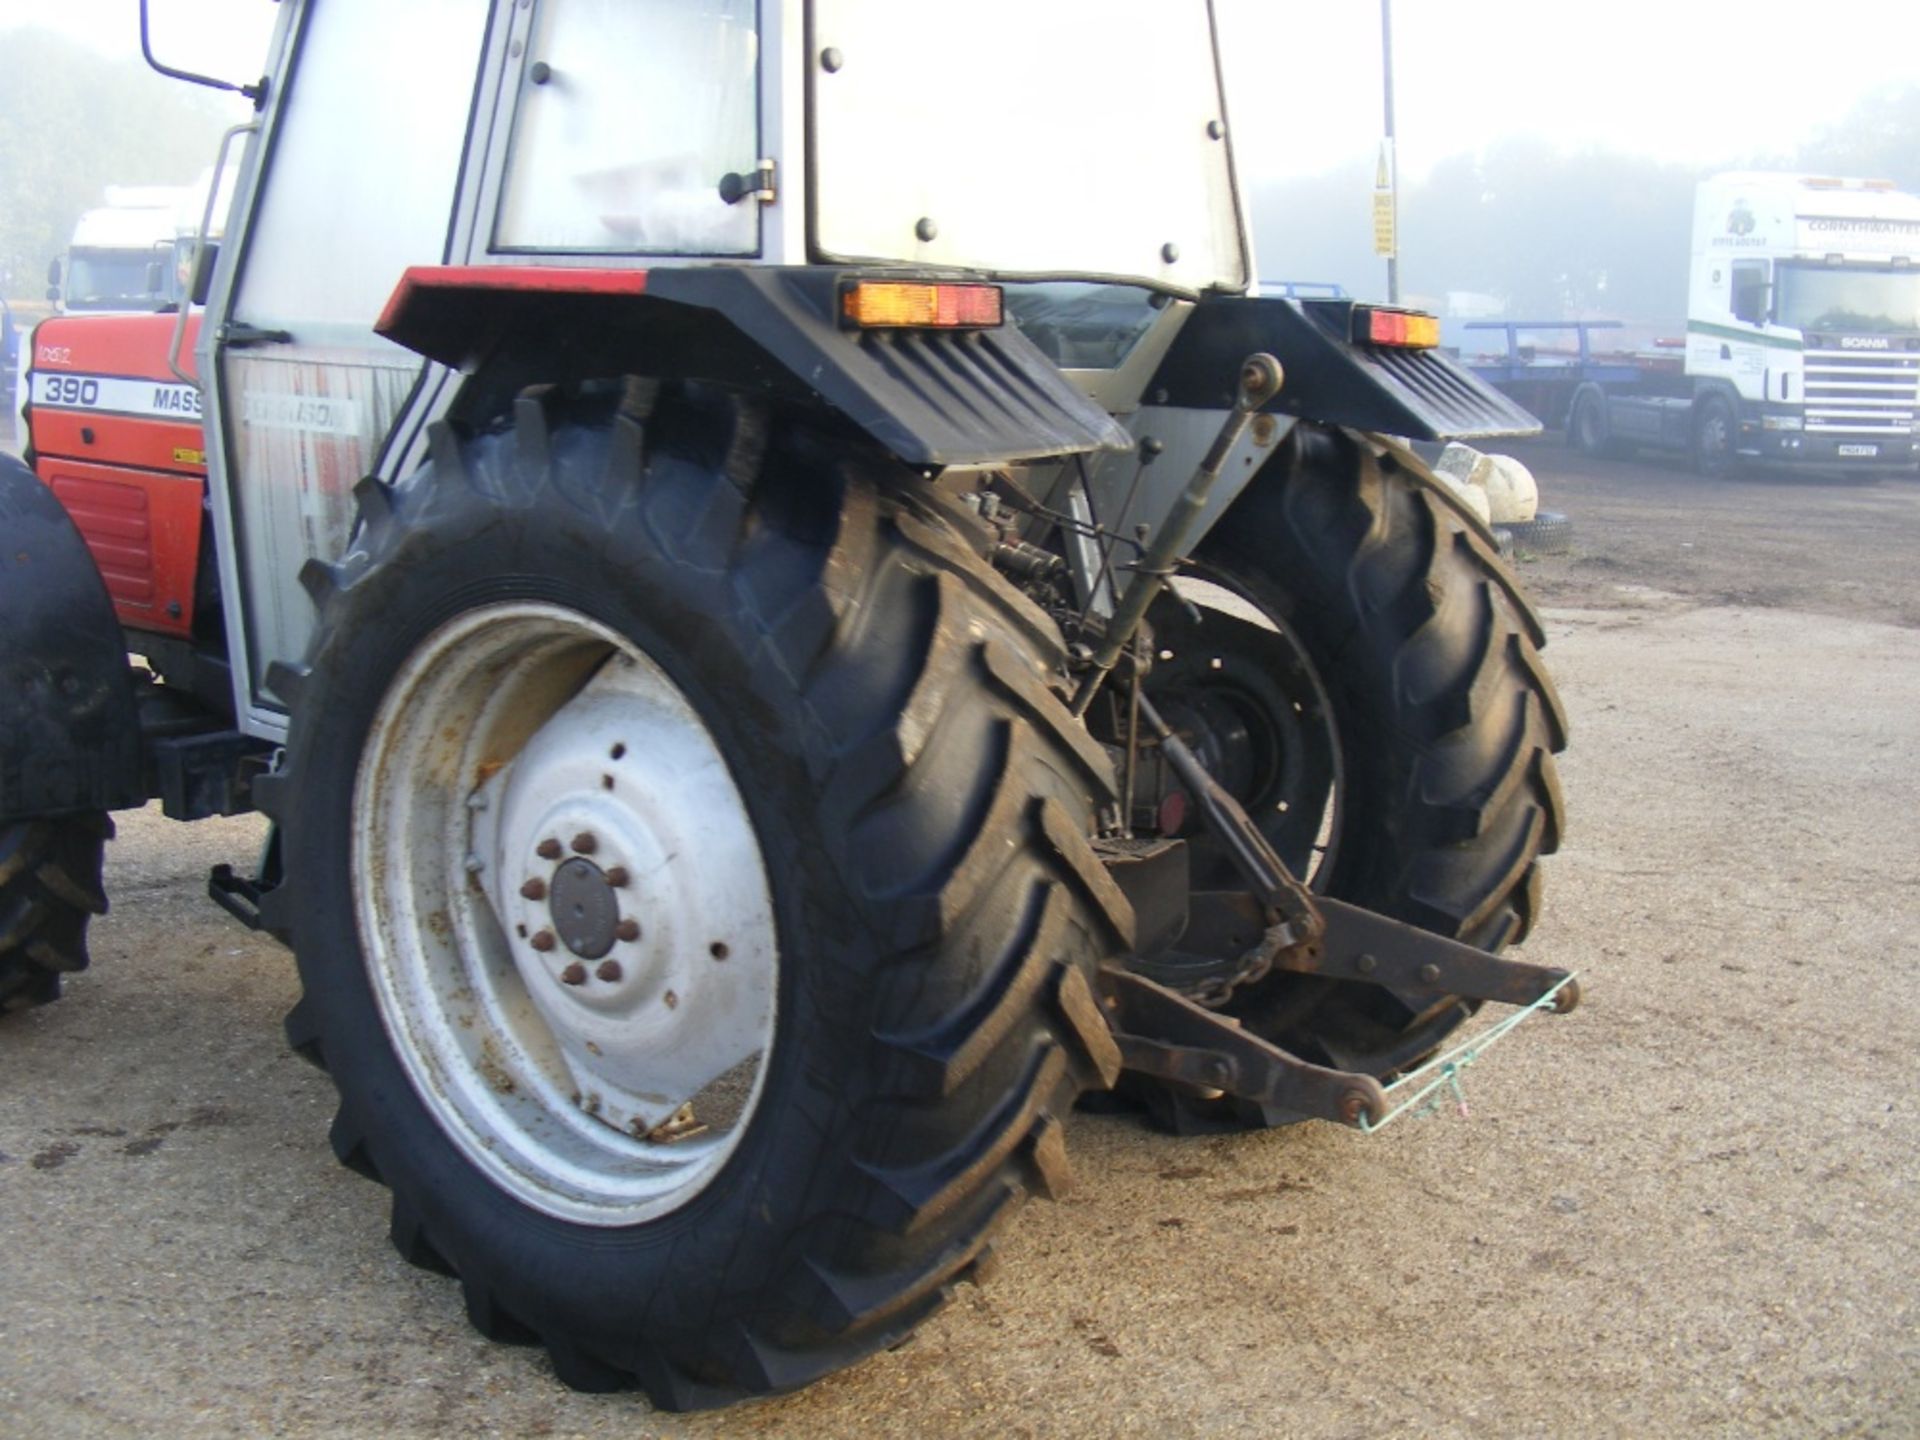 Massey Ferguson 390 4wd Tractor 3274 Hrs. Reg. No. H717 KCS - Image 4 of 4